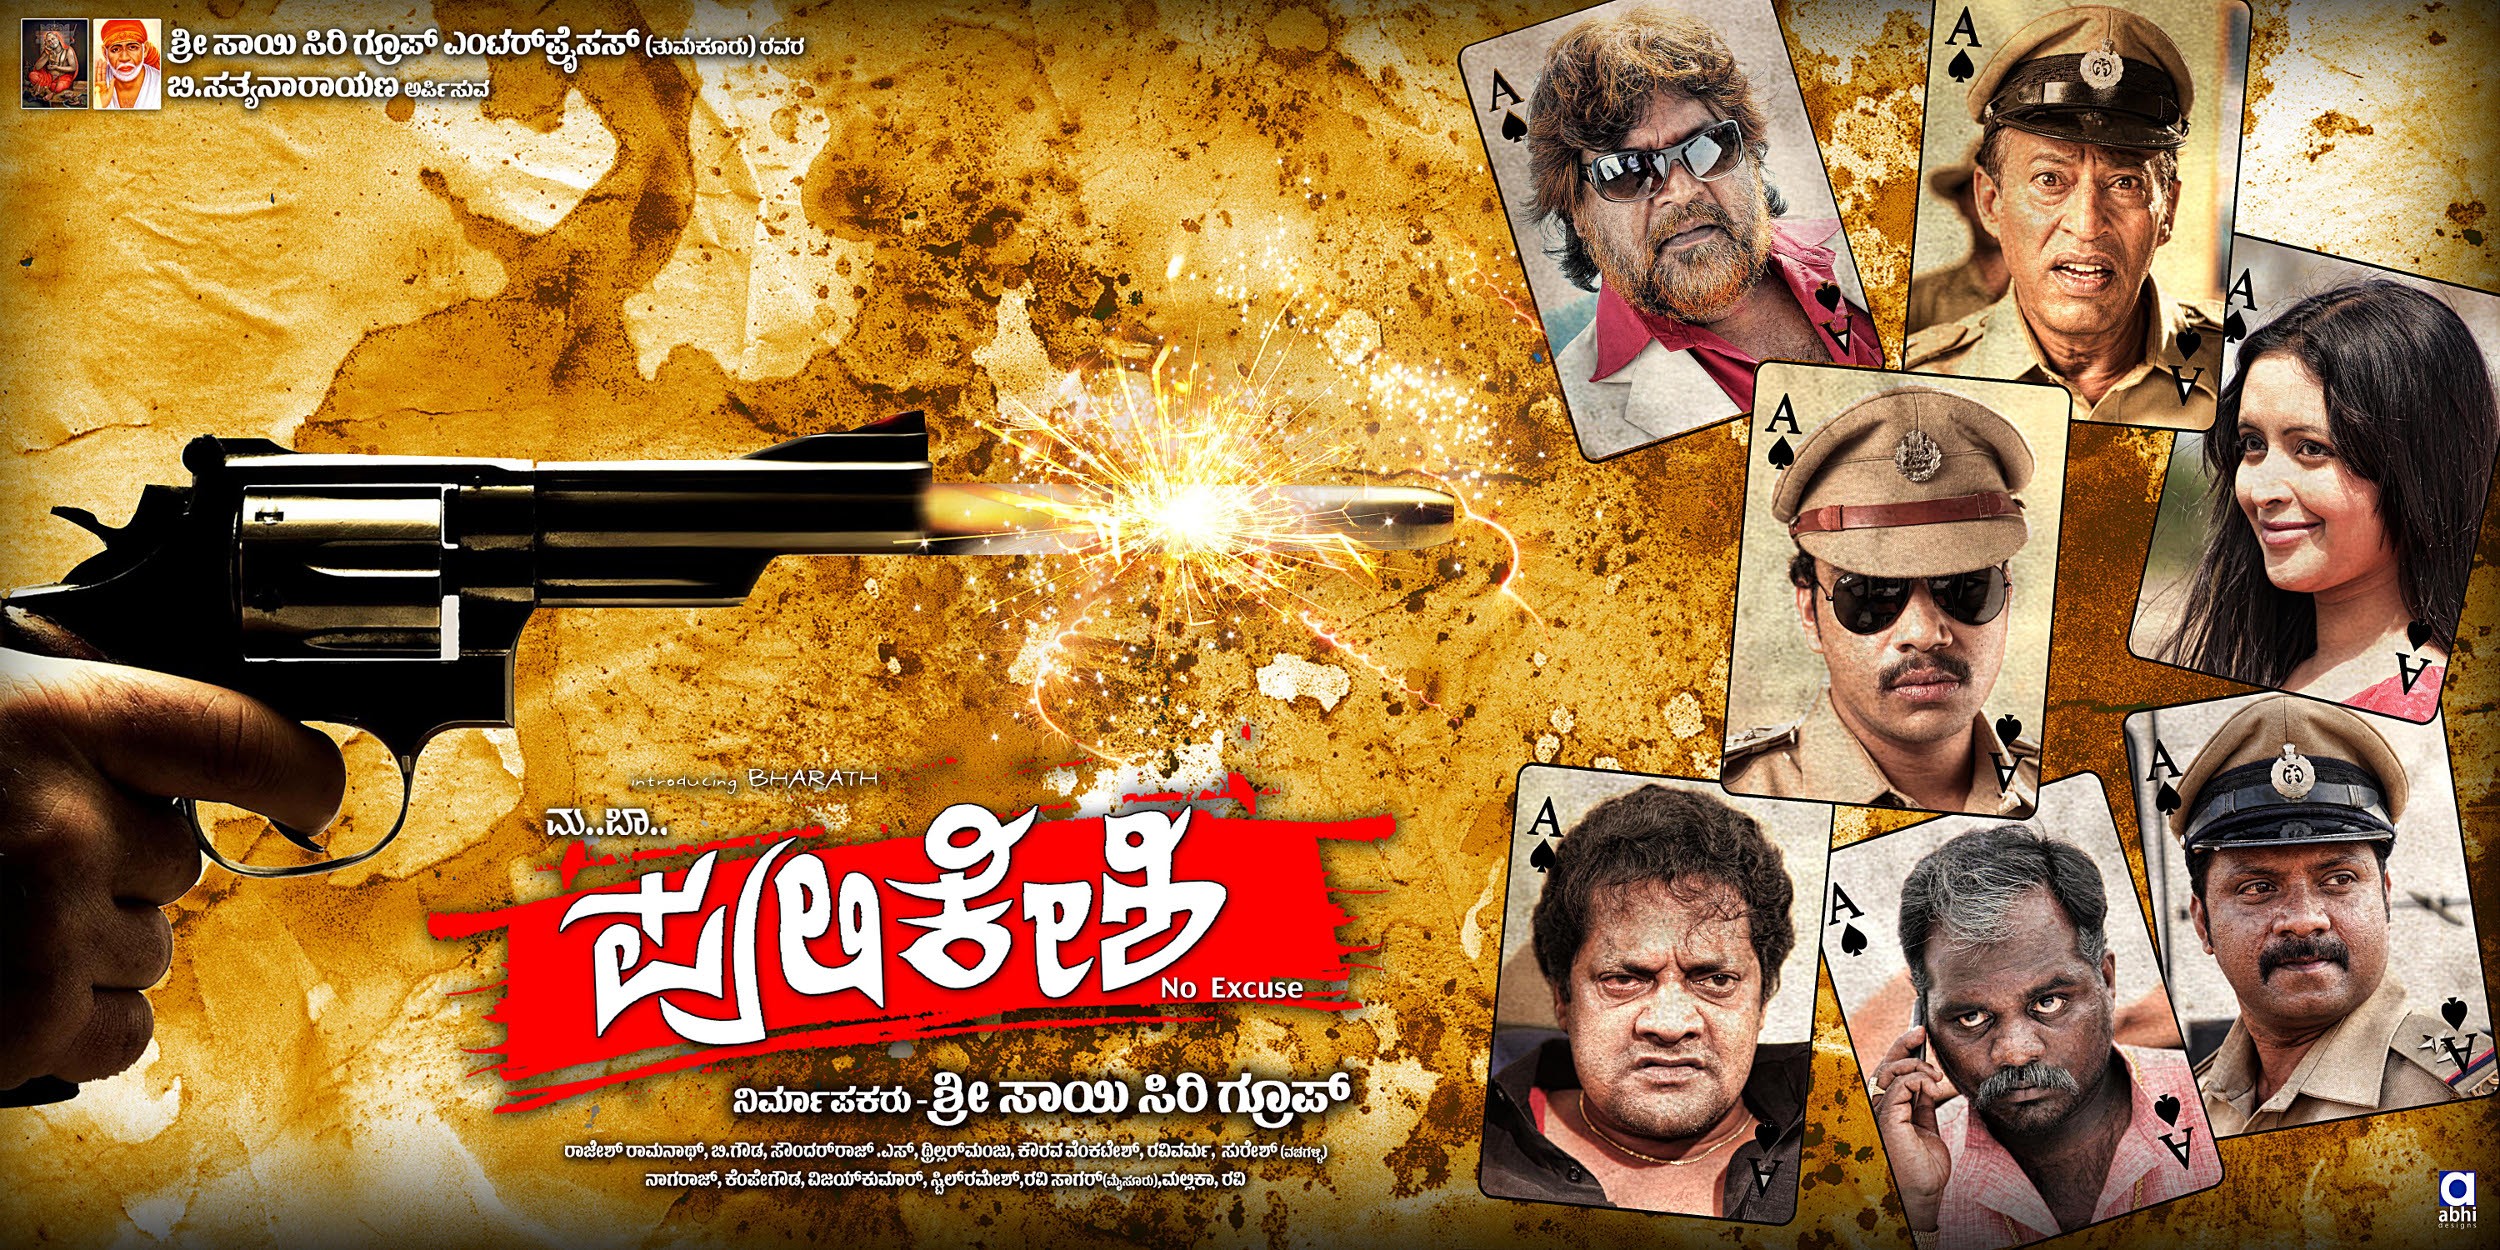 Mega Sized Movie Poster Image for Pulakeshi (#6 of 15)